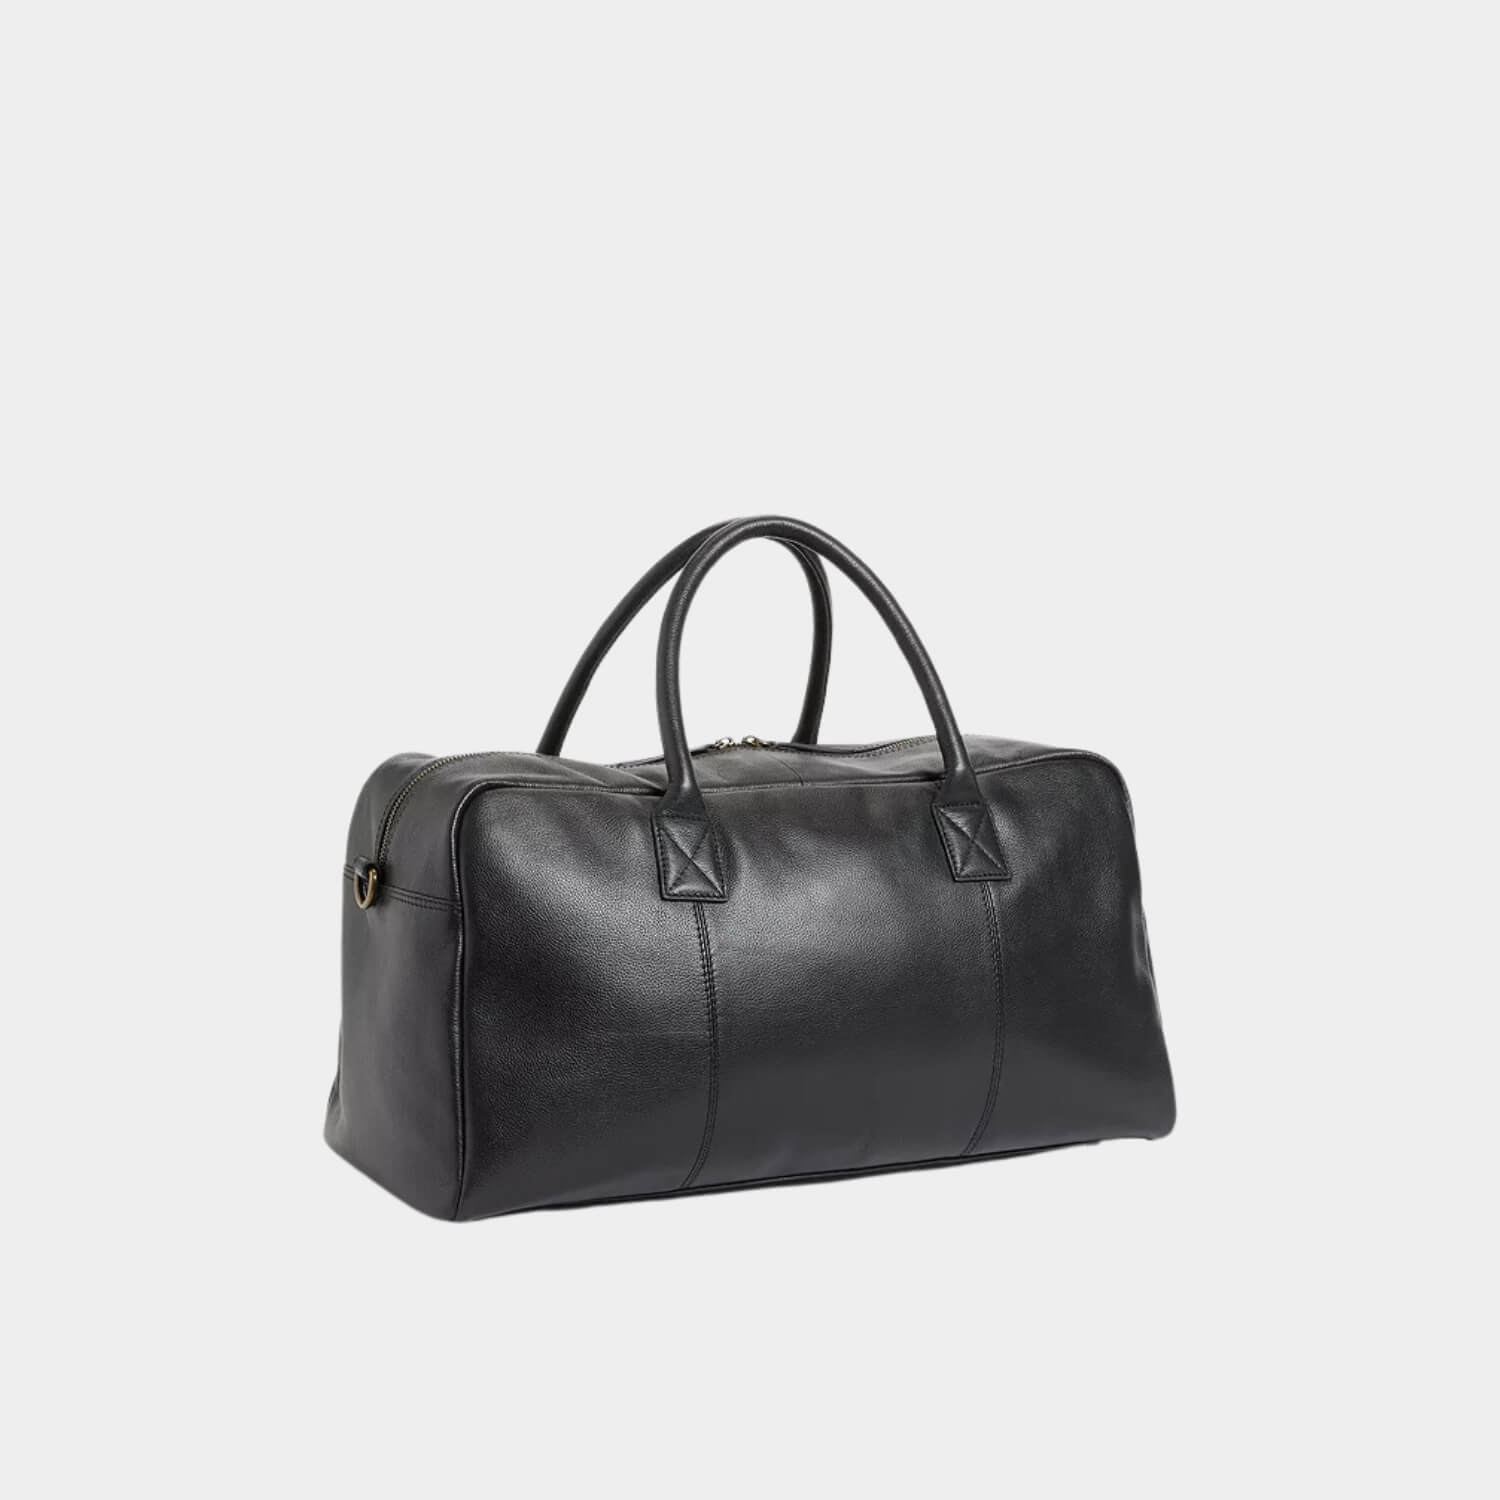 Classy Black Leather Duffle Bag